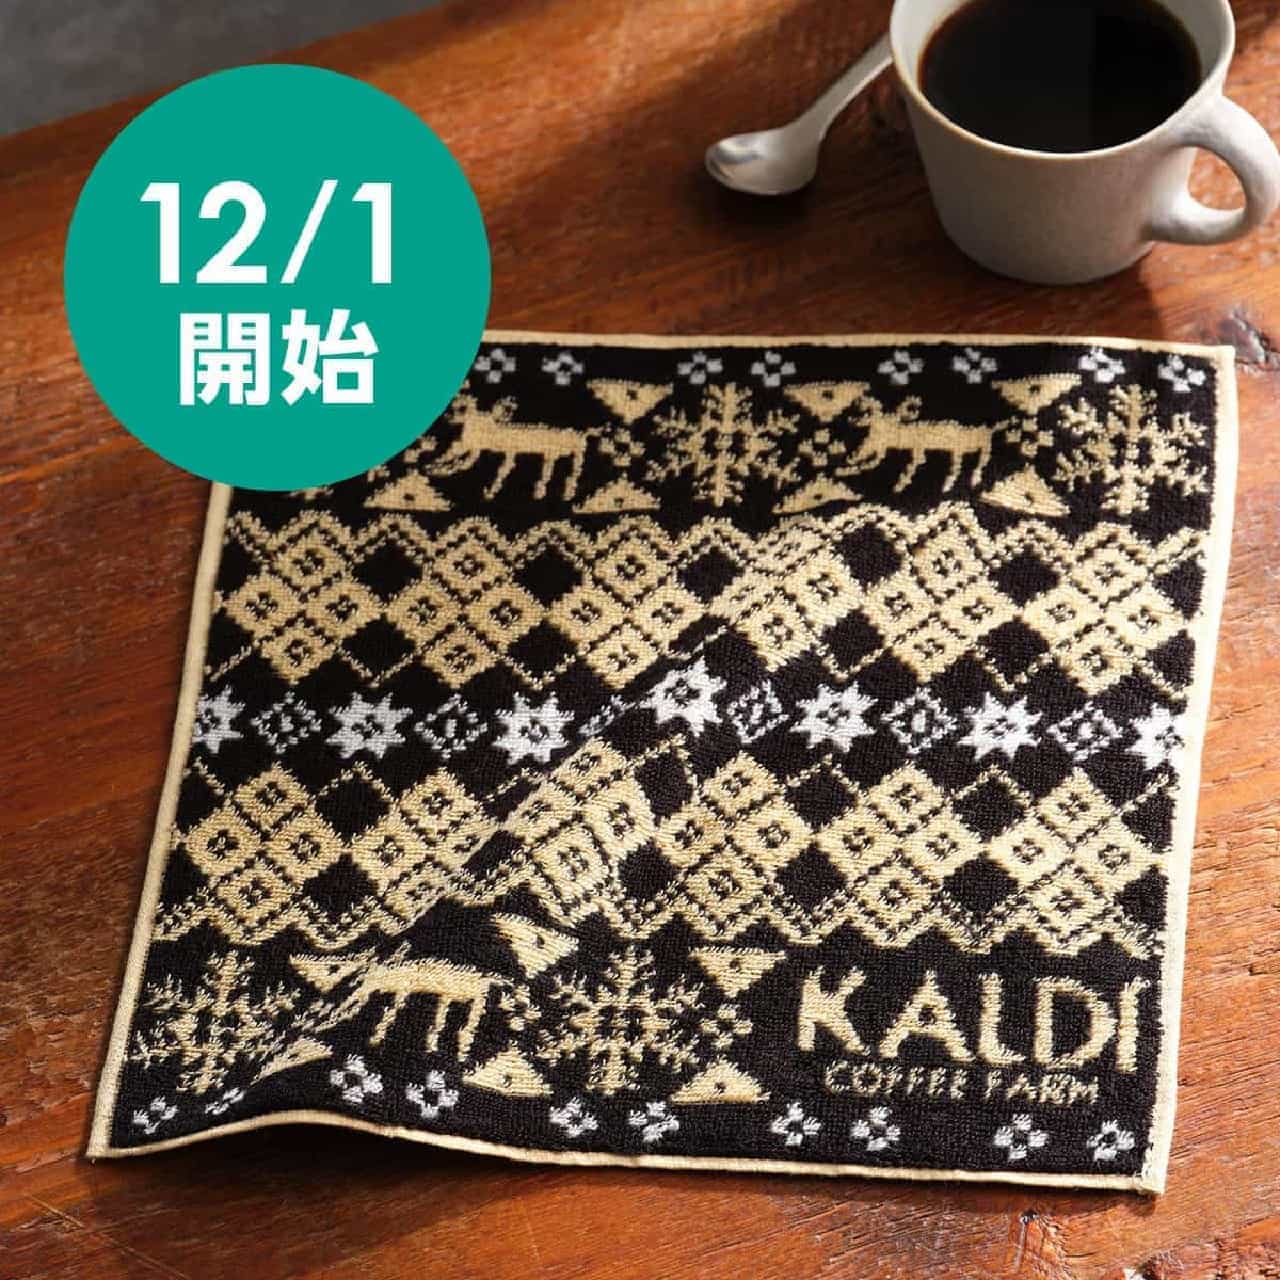 KALDI "Original Imabari Towel Handkerchief"